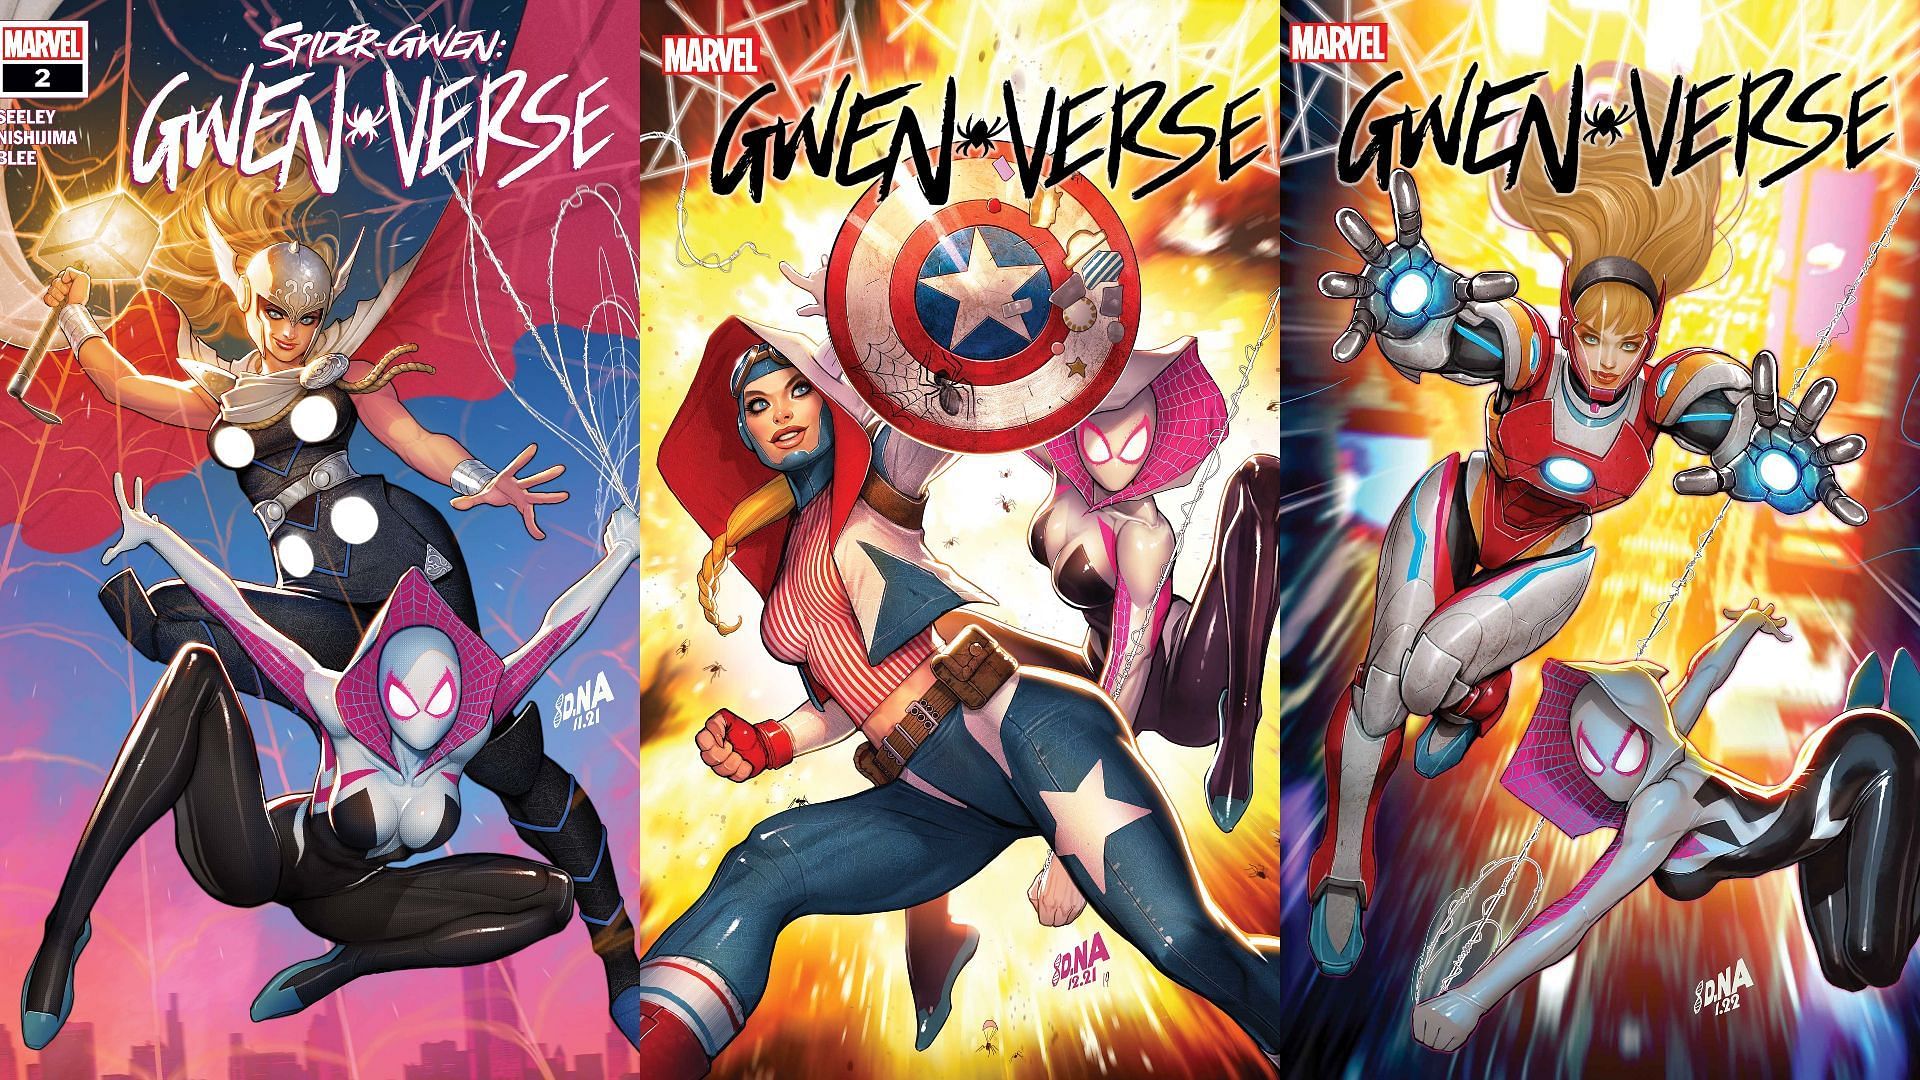 Variants of Gwen Stacy in Gwenverse (Image via Marvel Comics)